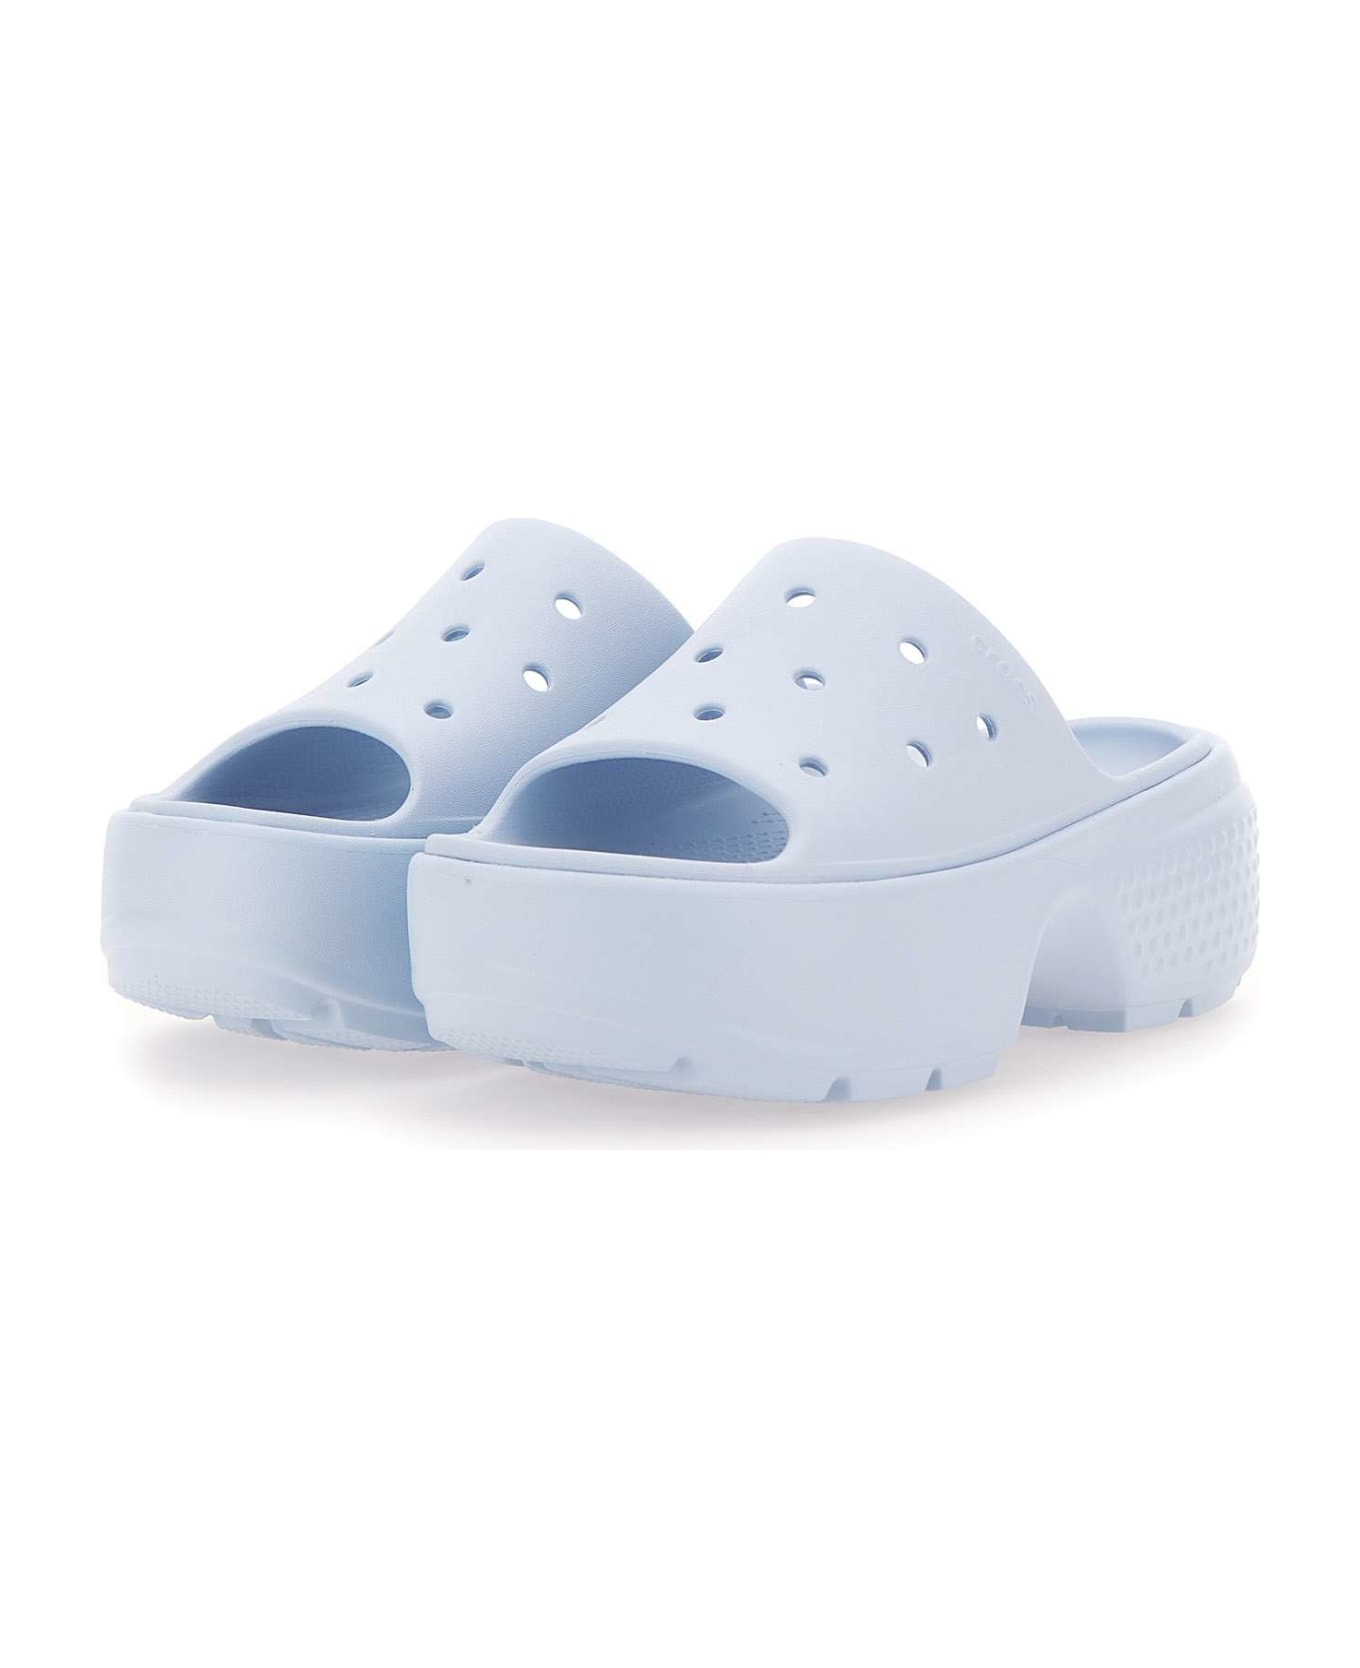 Crocs "stomp Slide" Sandals - BLUE